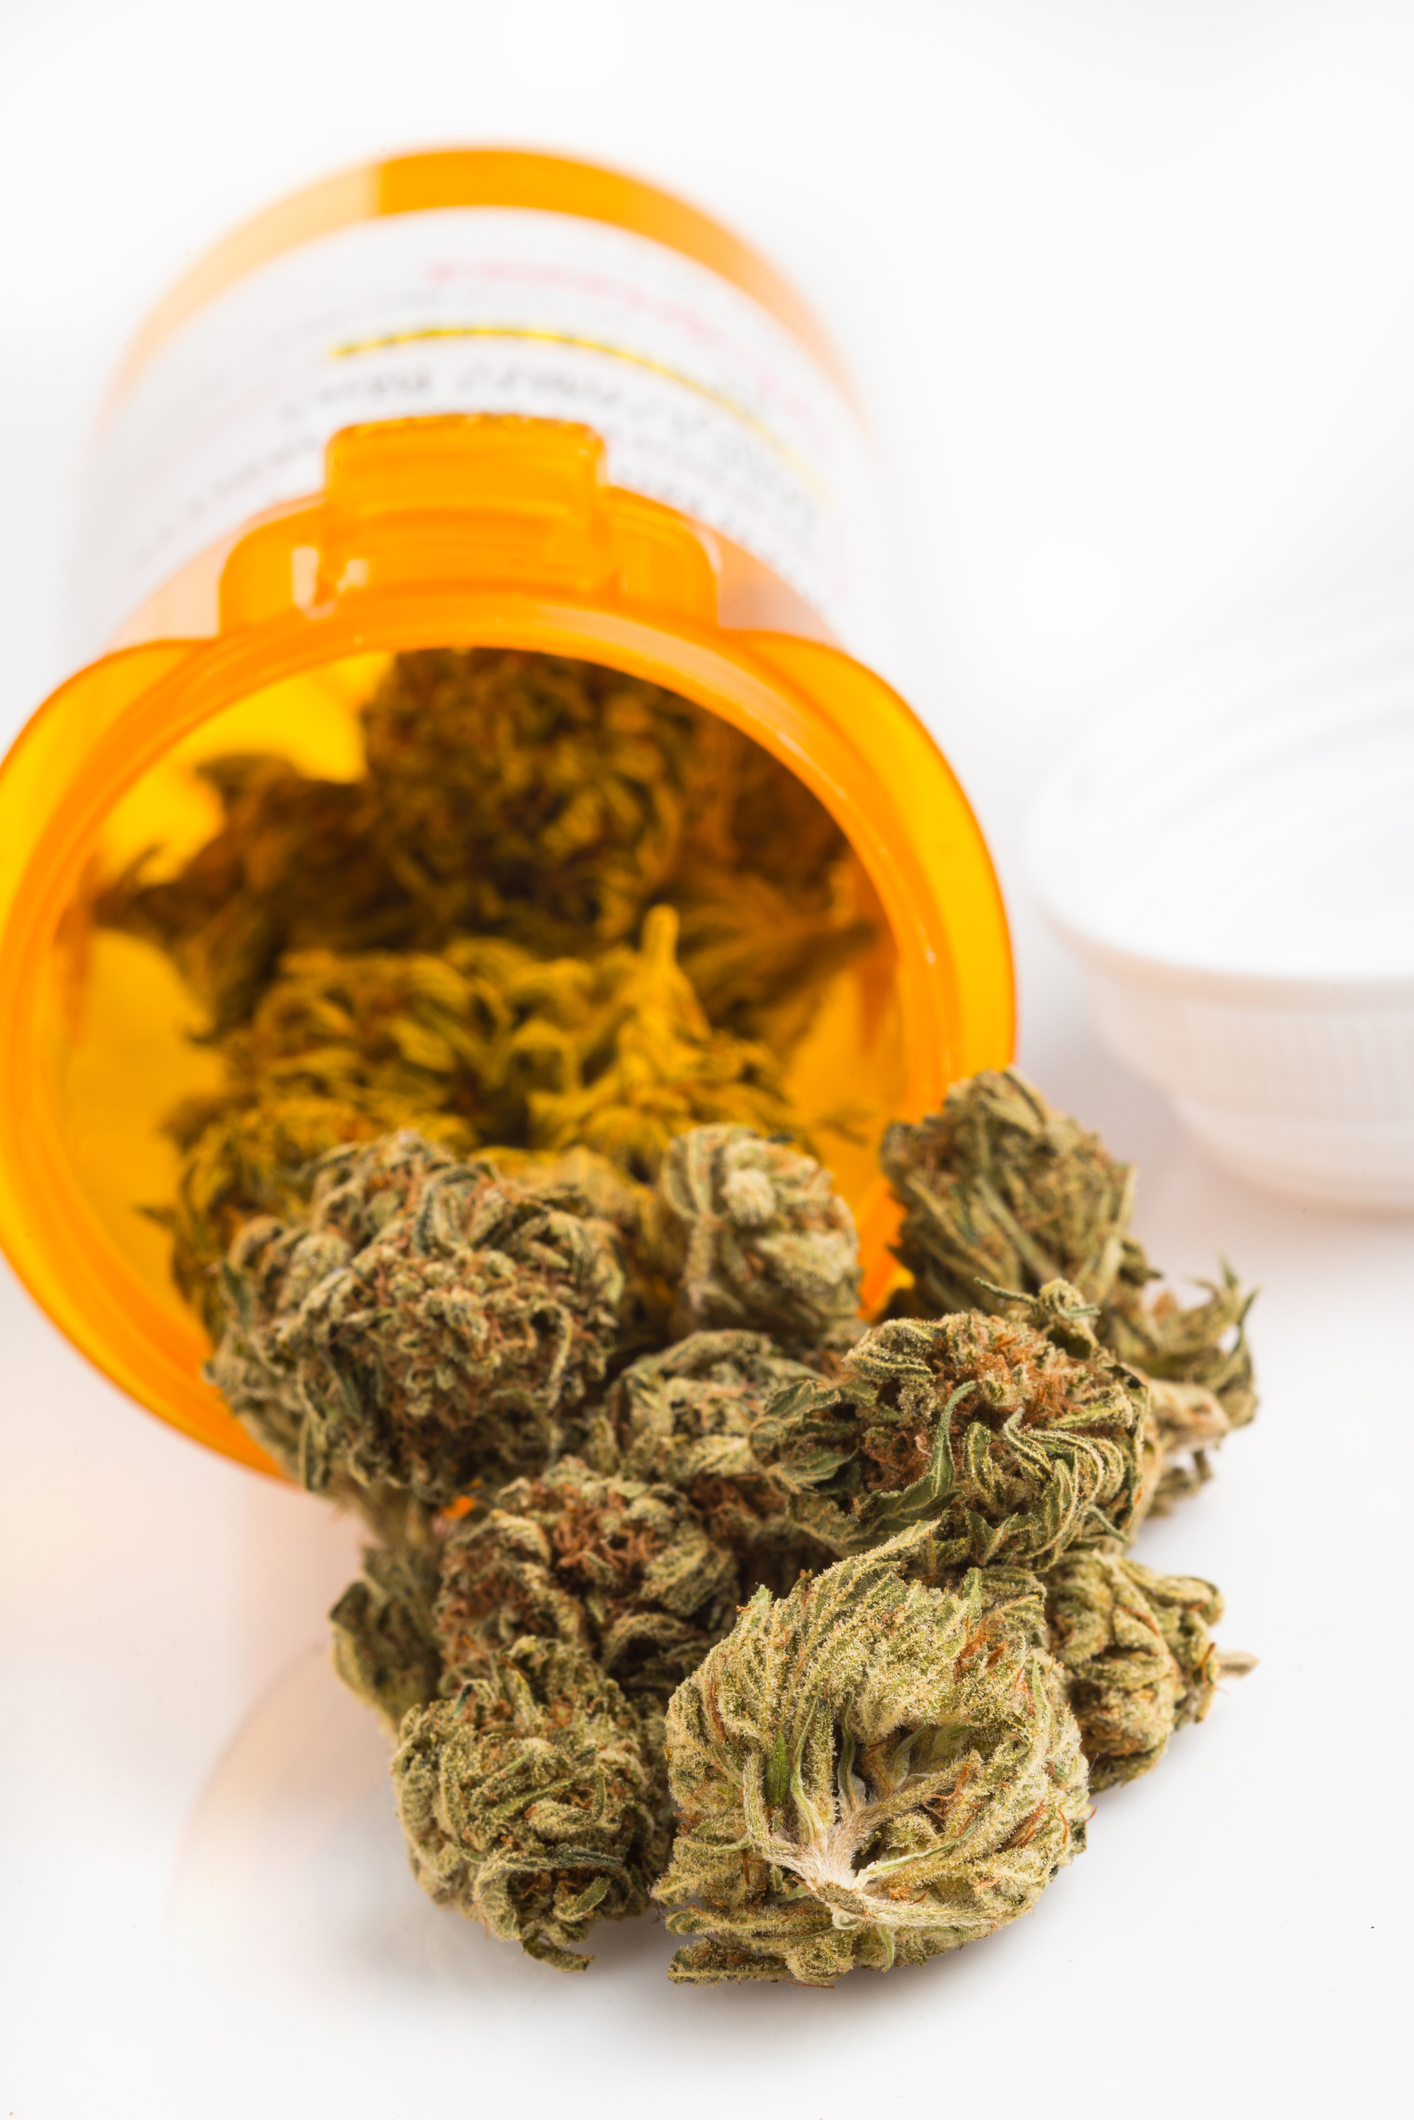 Should Marijuana Be Used in Addiction Treatment?